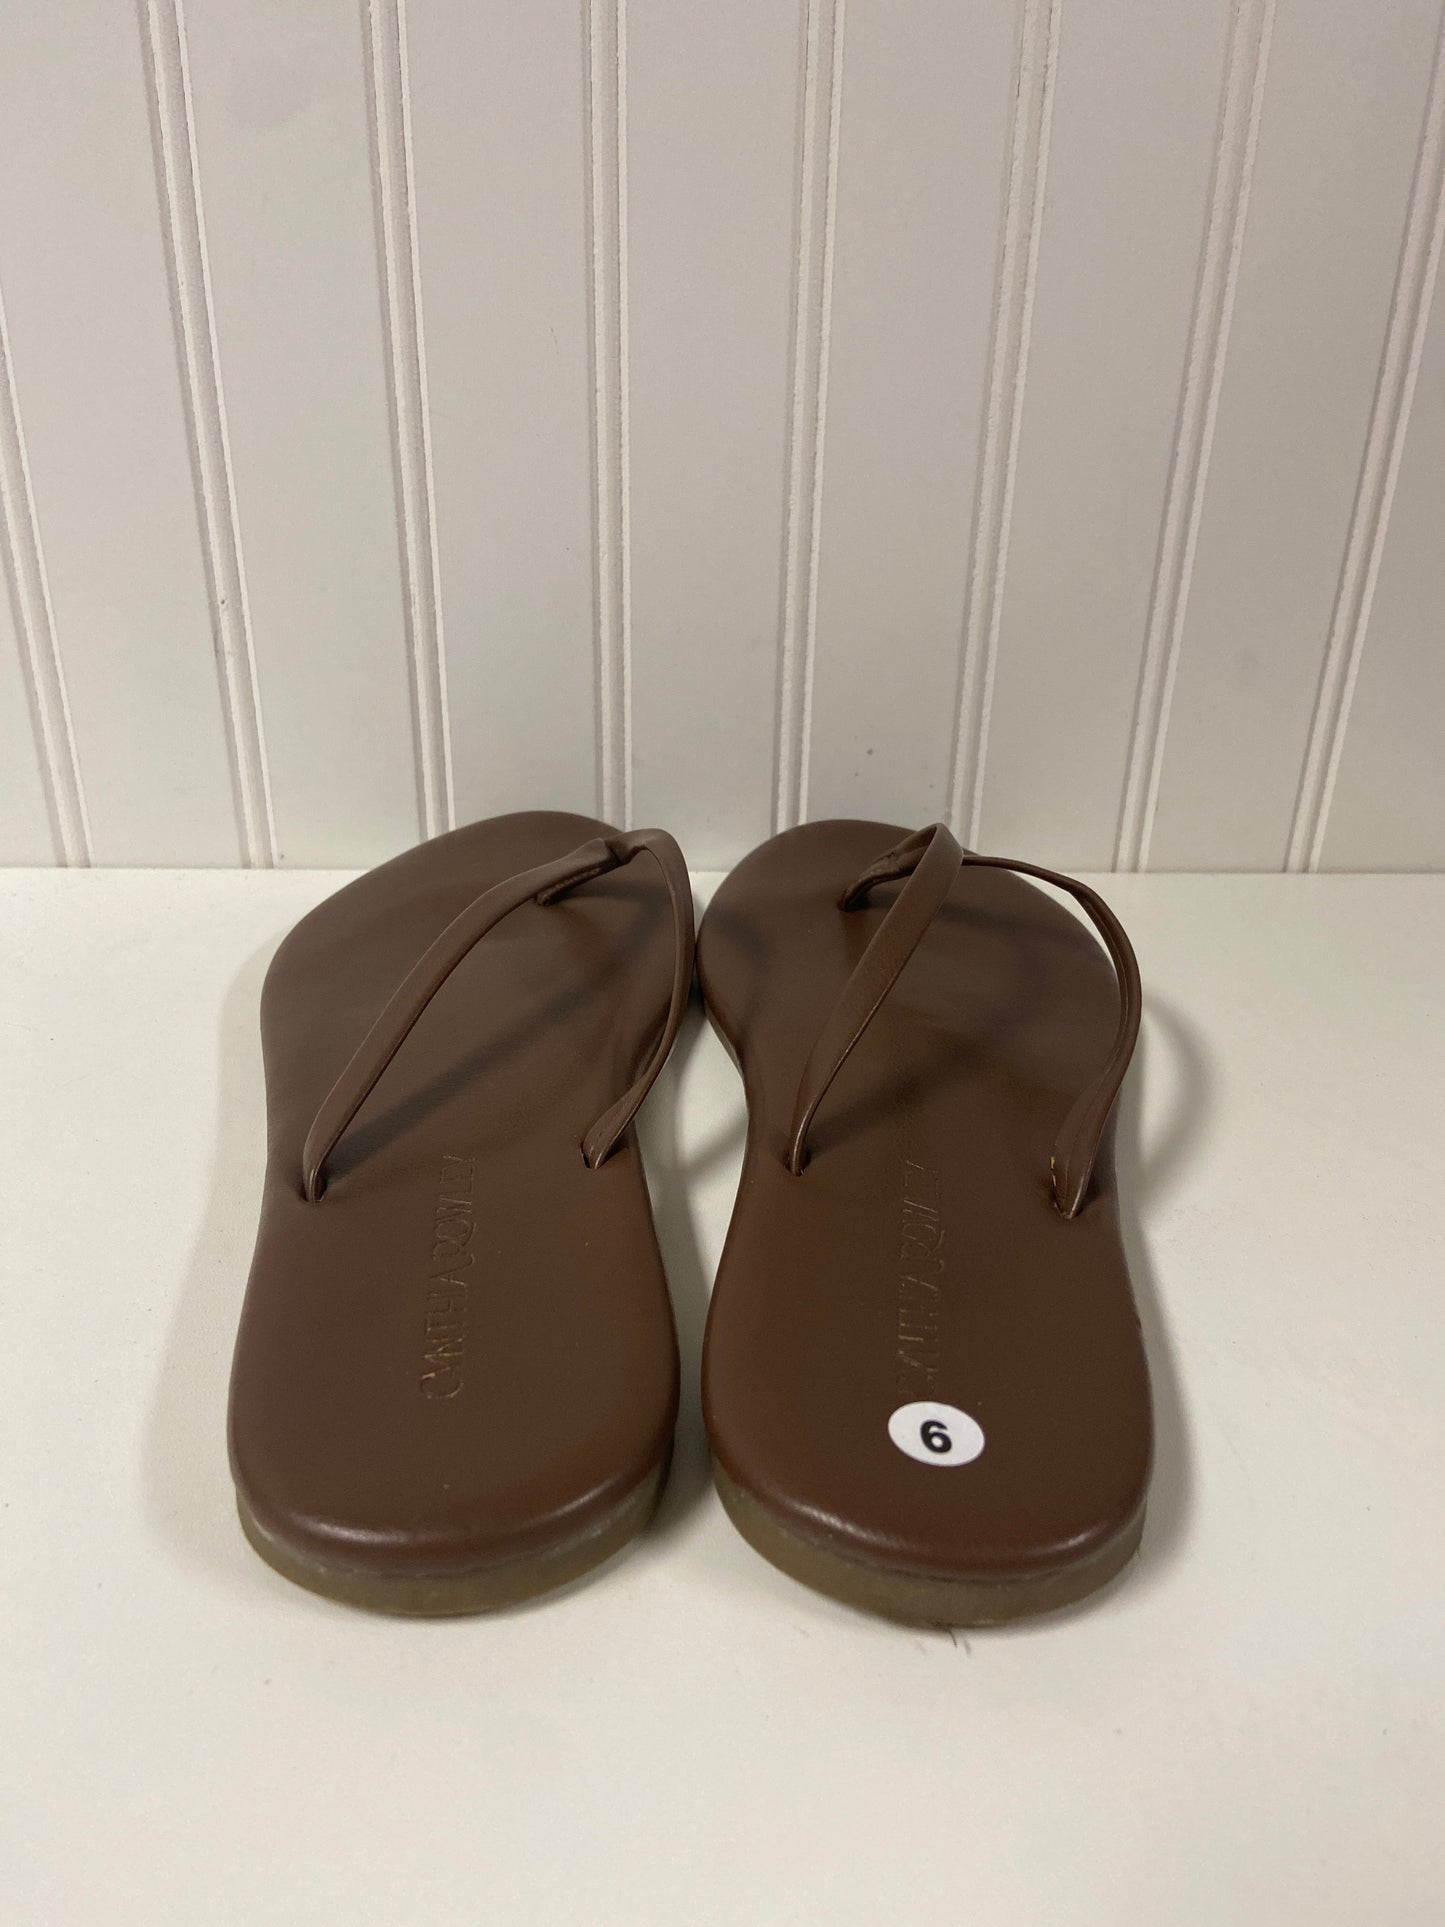 Brown Sandals Flip Flops Cynthia Rowley, Size 9